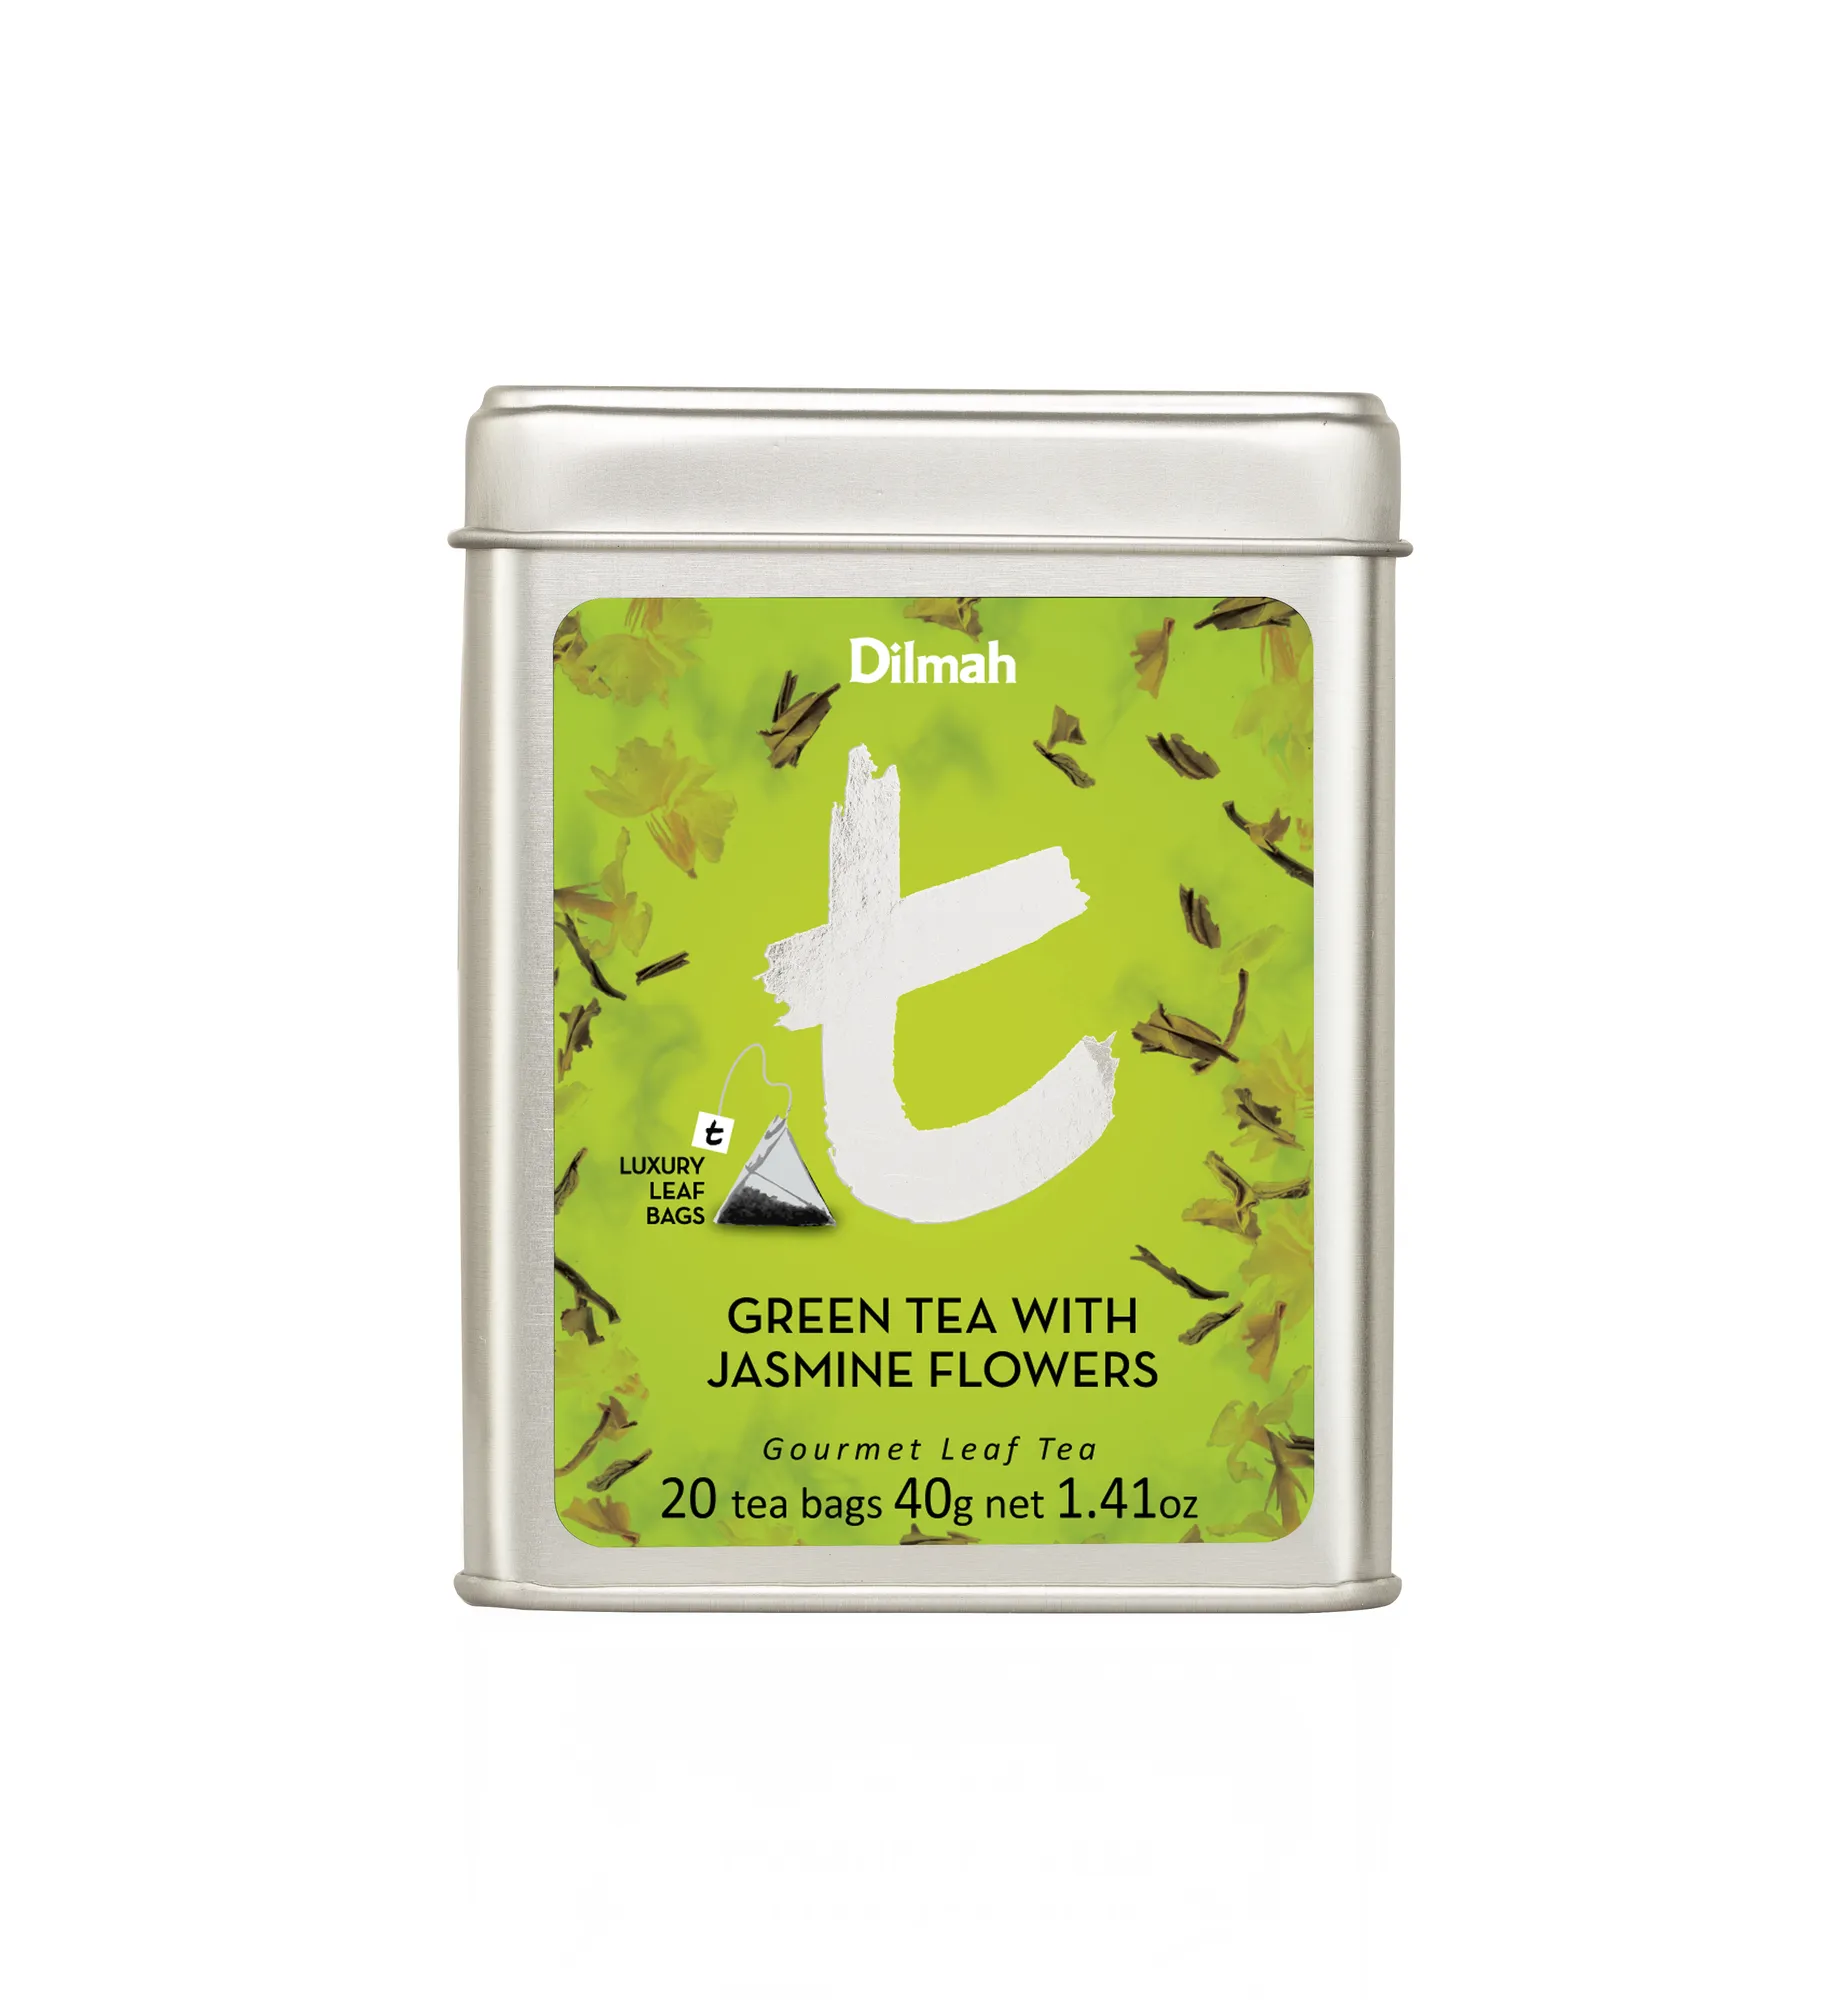 20 luxury tea bags of Green Tea with Jasmine Flowers in tin